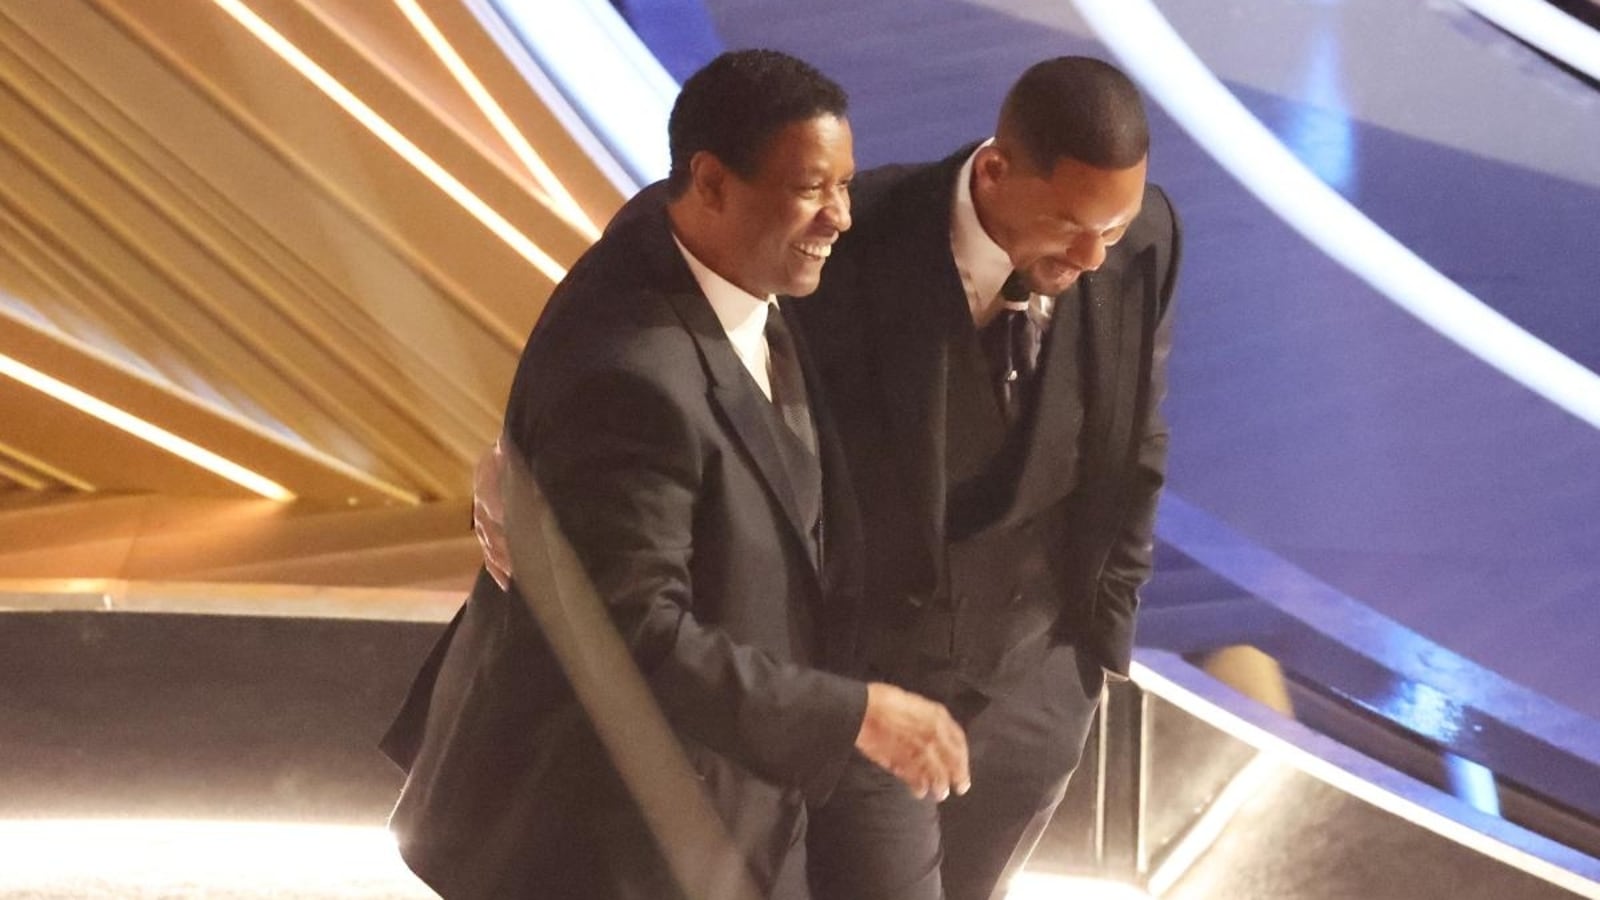 Denzel Washington’s take on why Will Smith slapped Chris Rock at Oscars: ‘Devil got ahold of him’